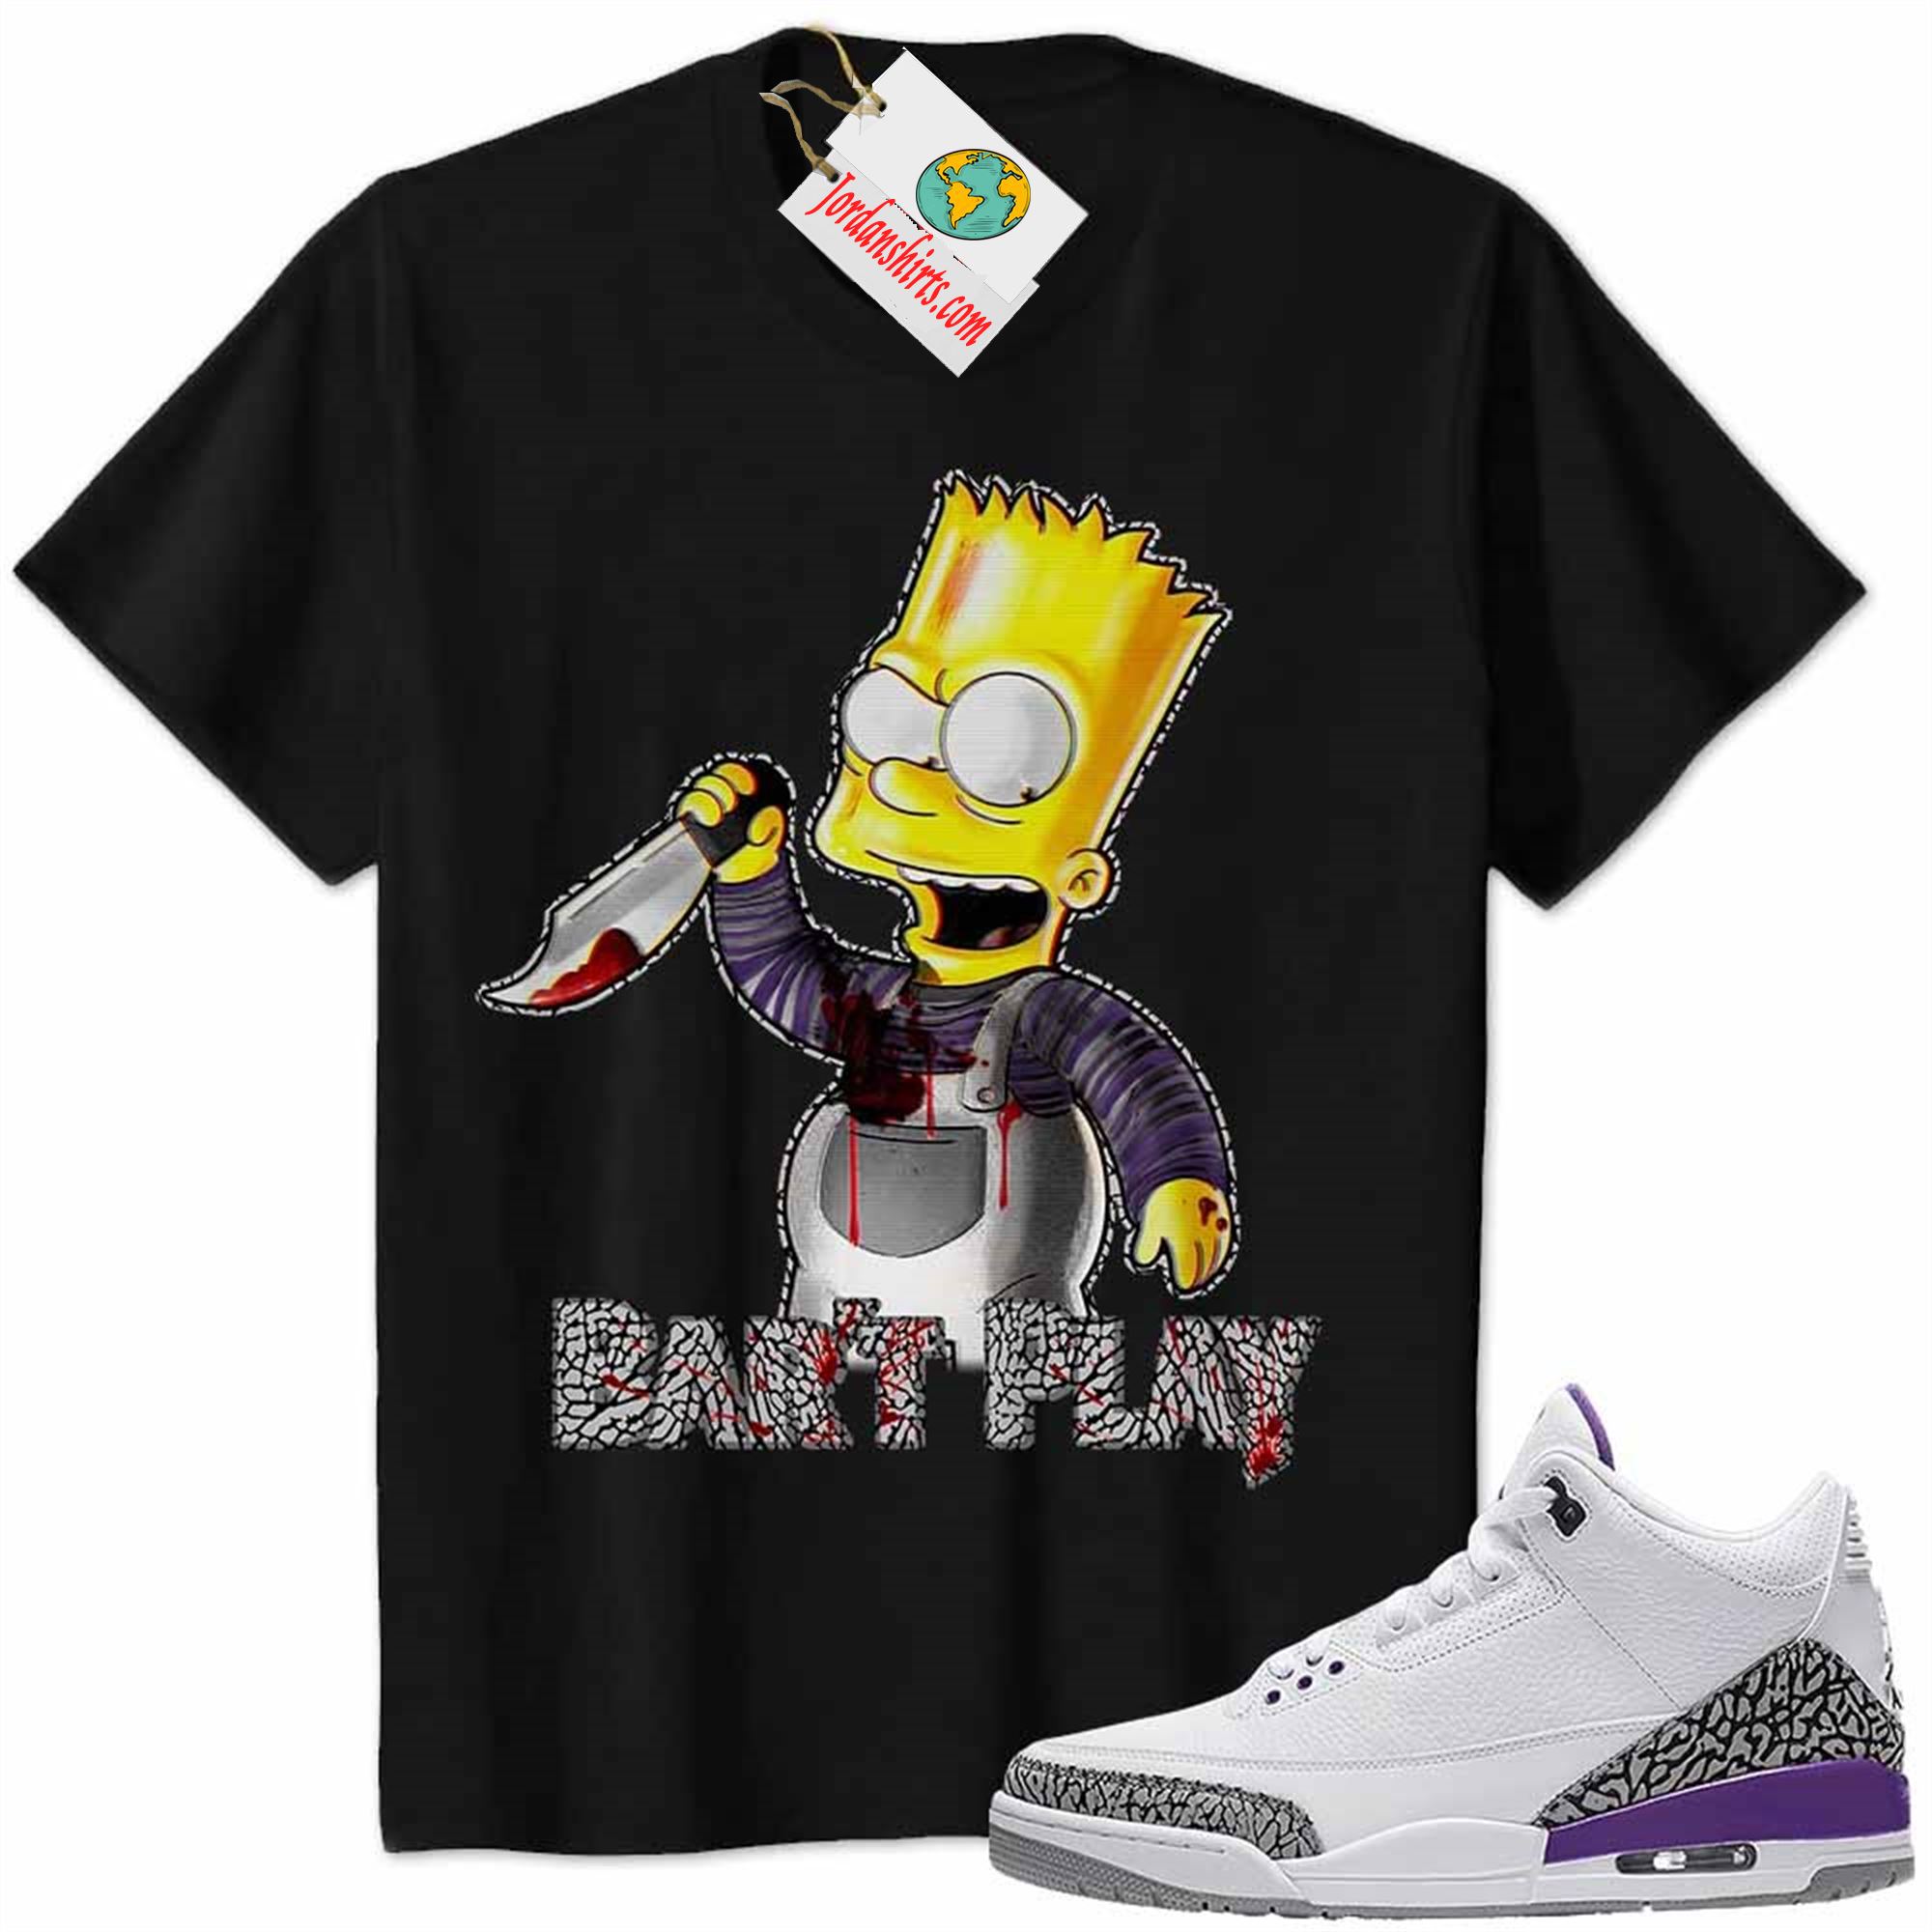 Jordan 3 Shirt, Jordan 3 Dark Iris Shirt Shirt Bart Chucky Simpson Wanna Play Black Plus Size Up To 5xl